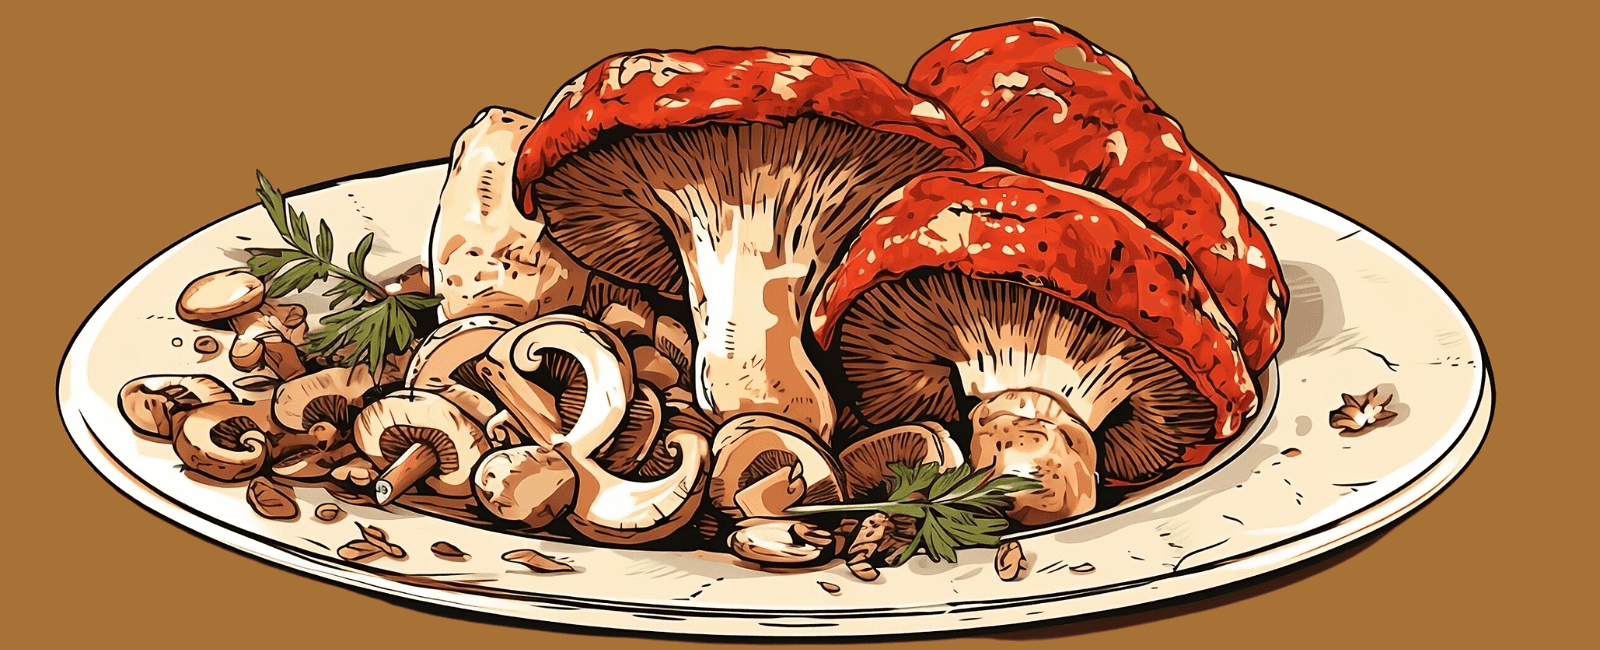 Regular Mushroom Consumption Can Reduce Risk of Mild Cognitive Impairment, Study Says